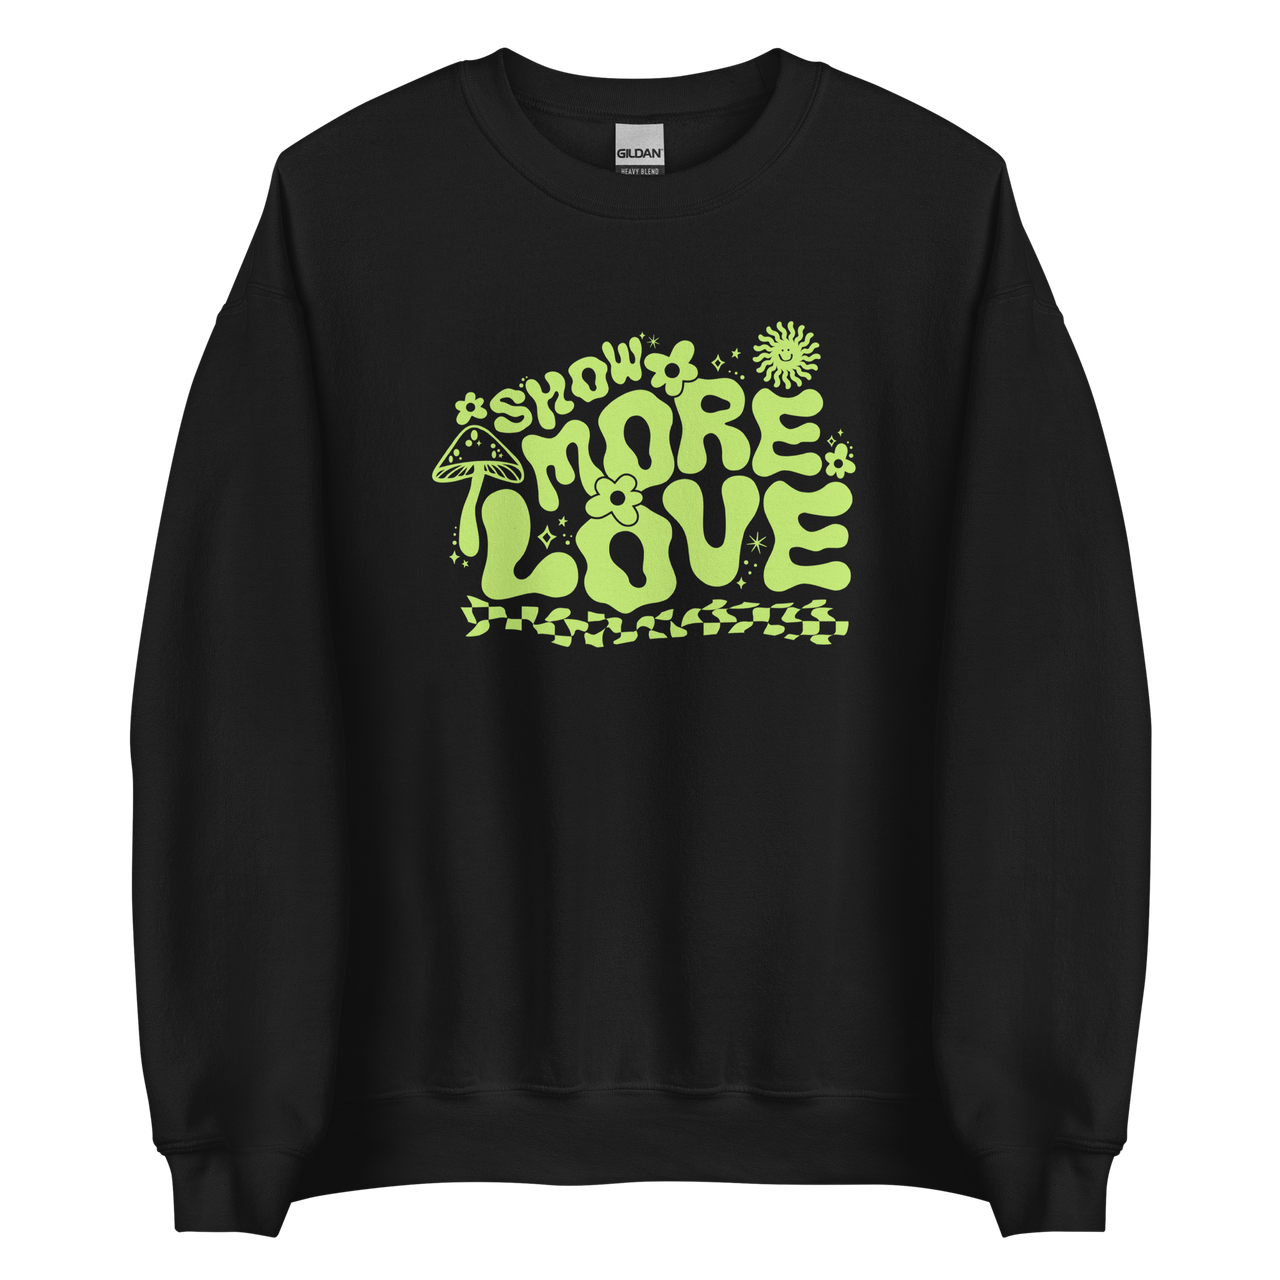 Show More Love Crewneck Sweatshirt